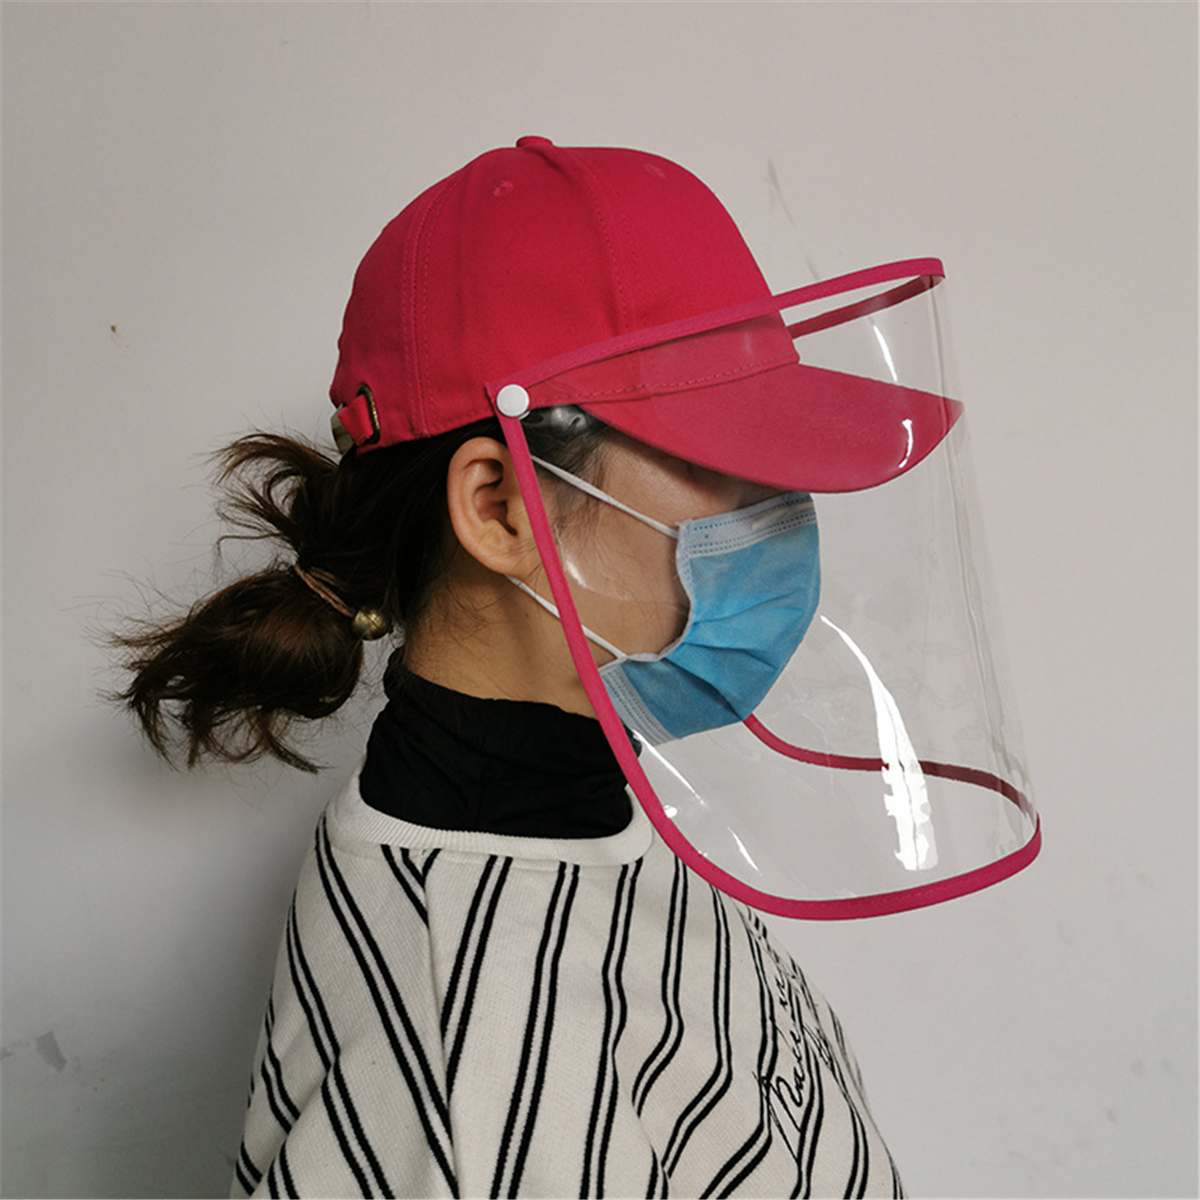 Removable-Protective-Cap-Full-Face-Mask-Splash-proof-Dustproof-Protector-Baseball-Hat-1654797-9